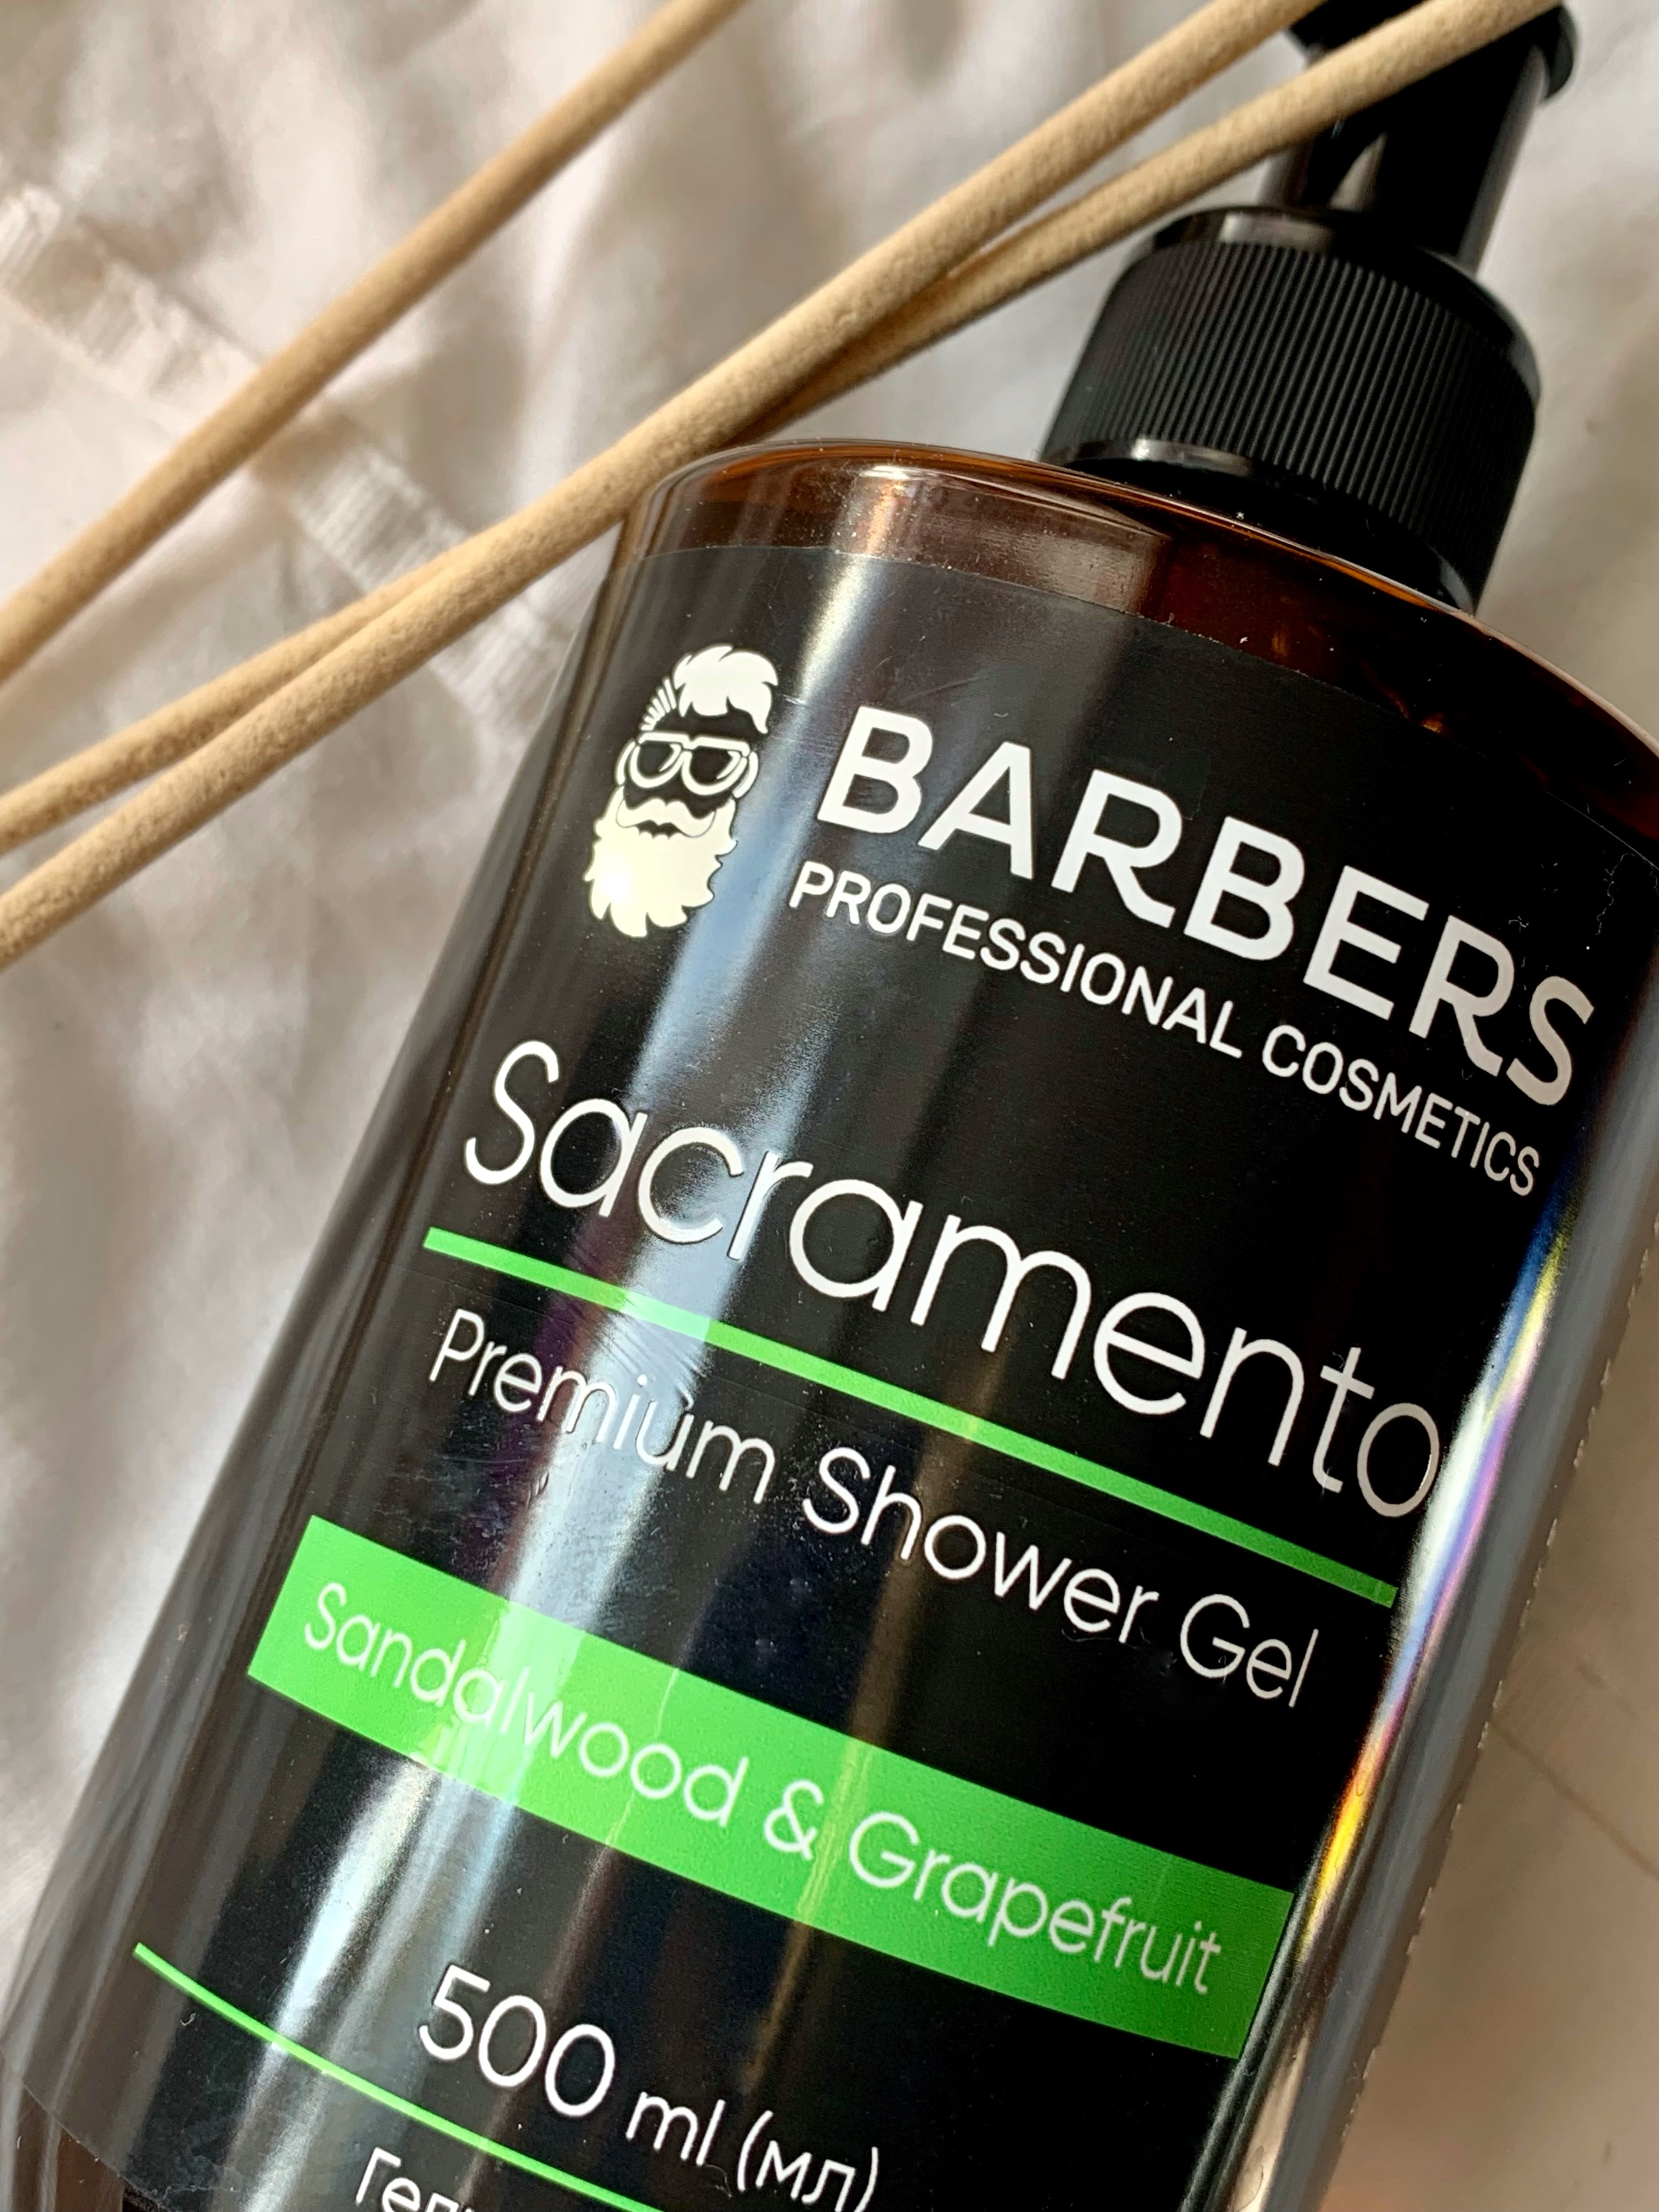 Barbers | Sacramento Premium Shower Gel